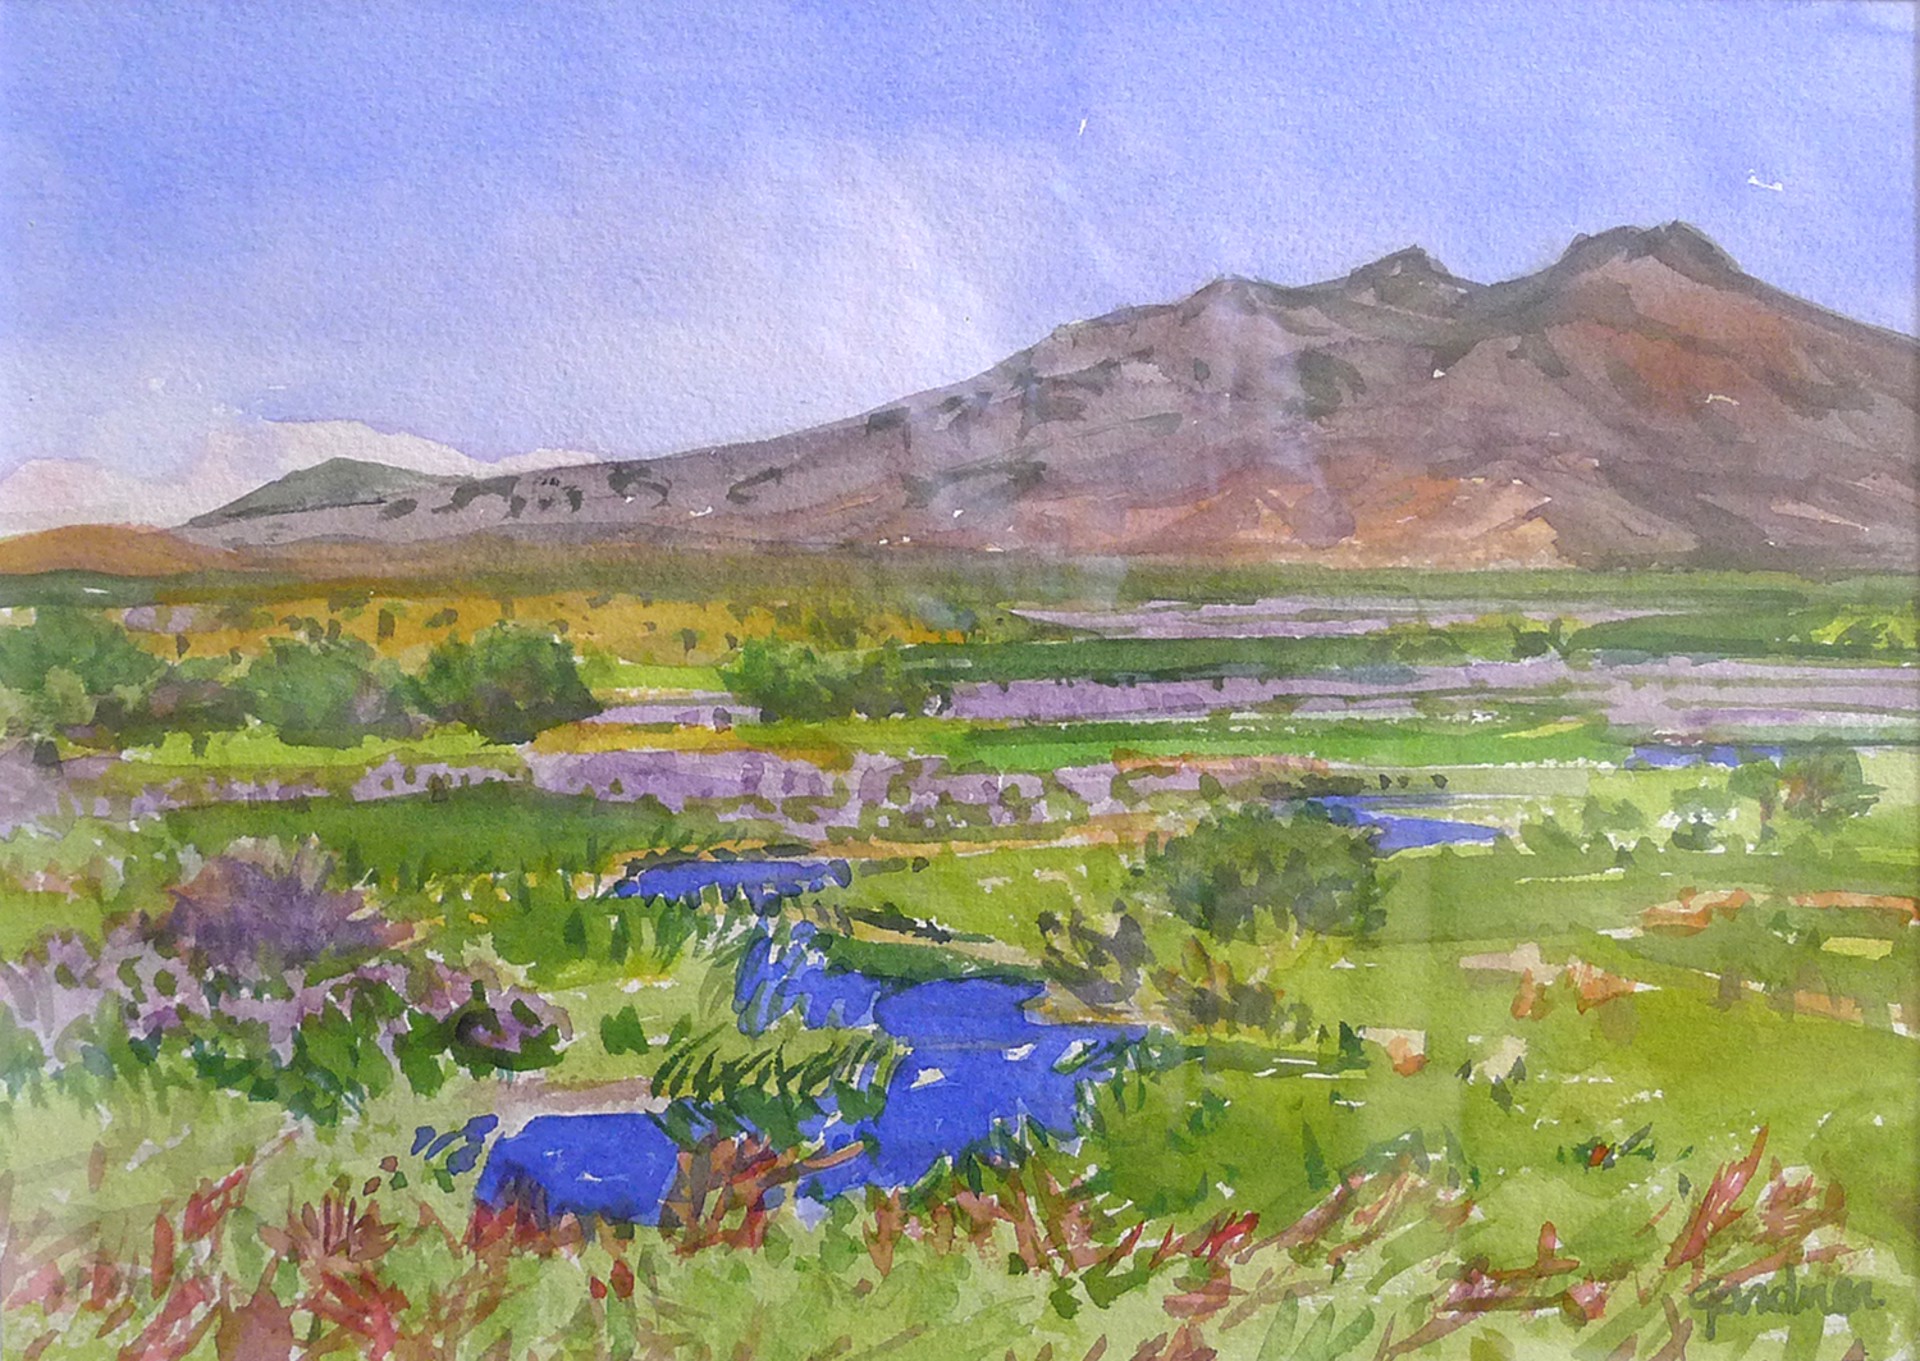 River Iris by Sheila Gardner